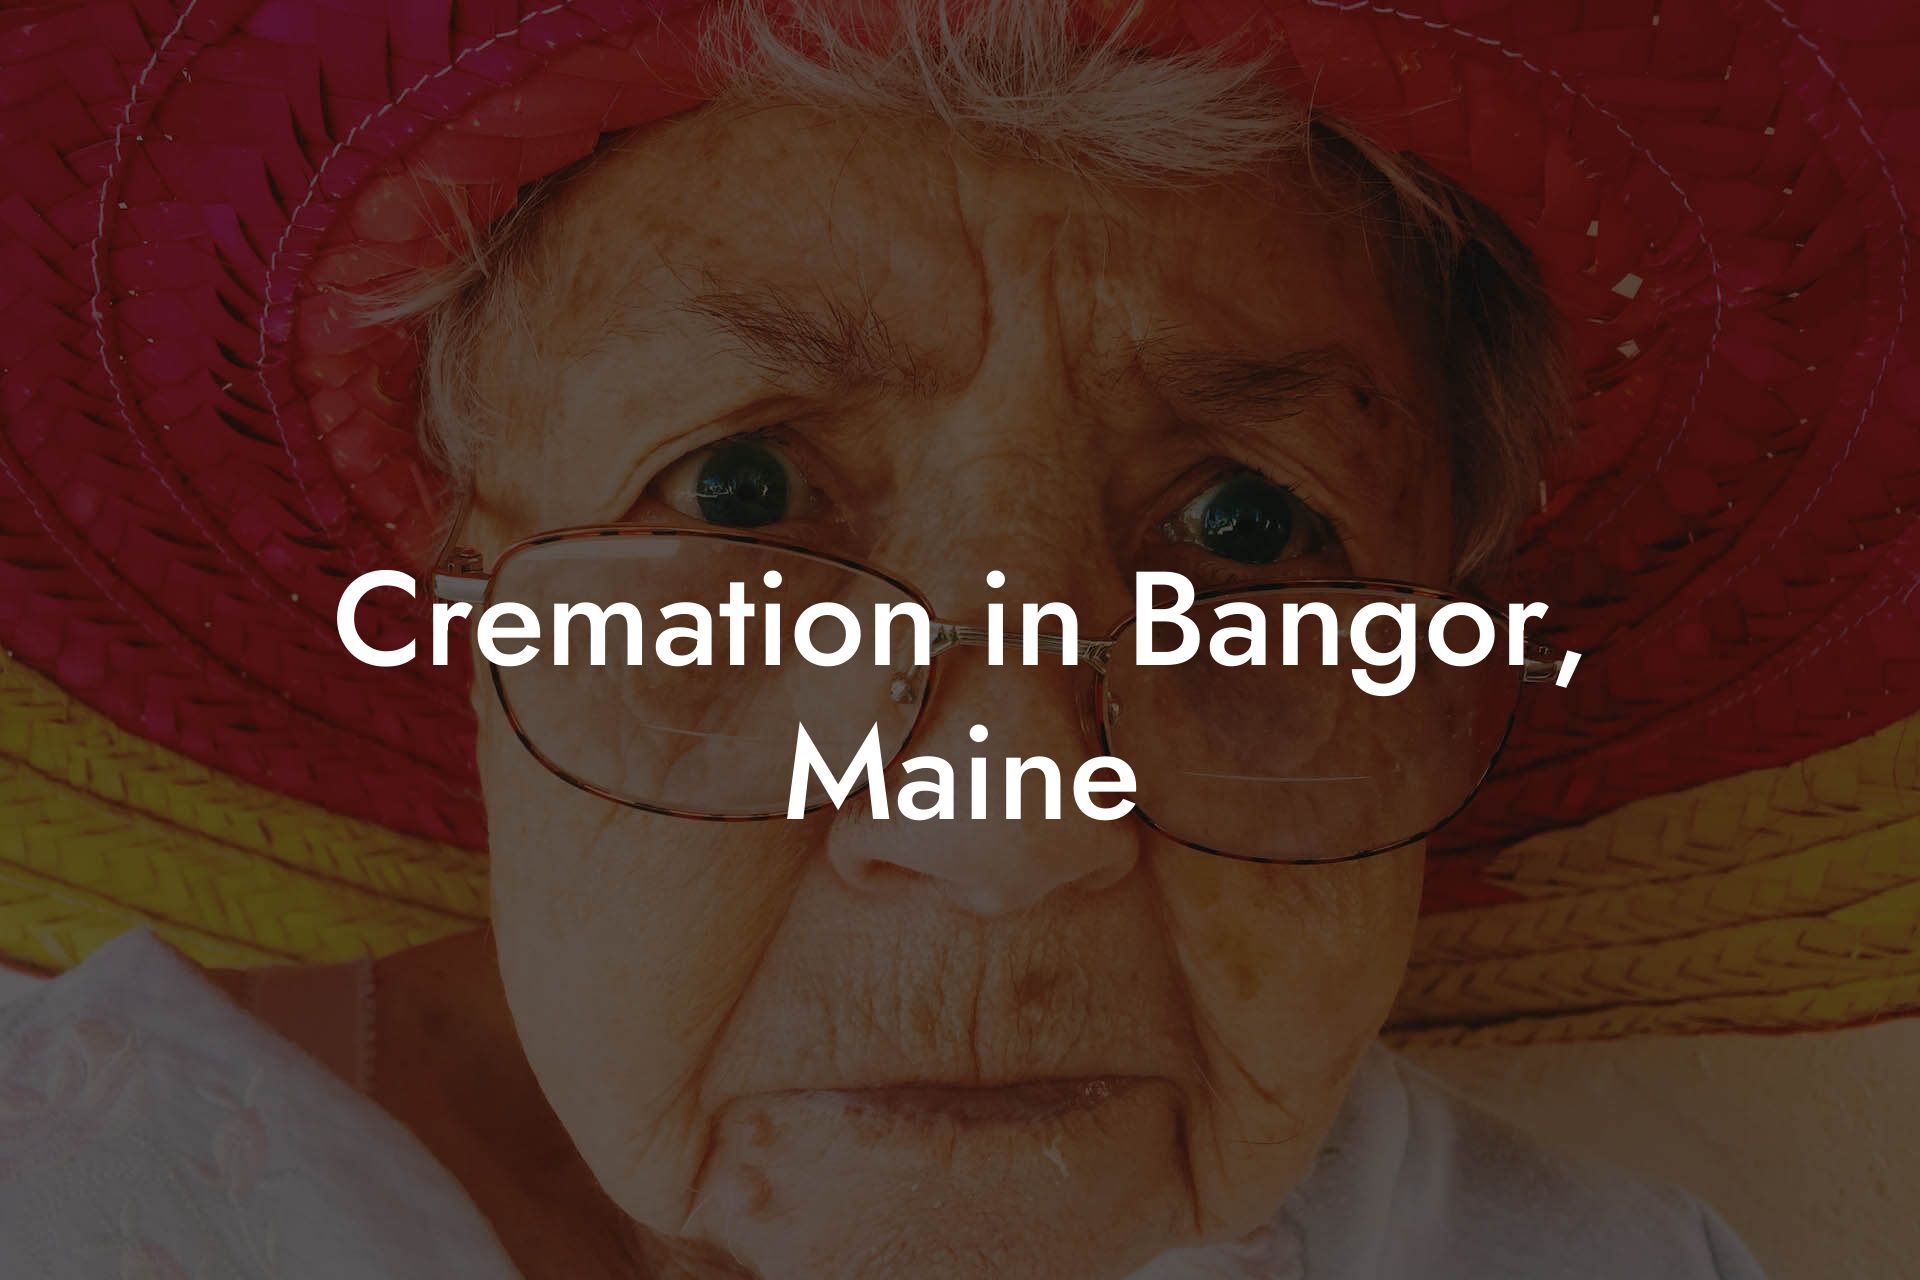 Cremation in Bangor, Maine